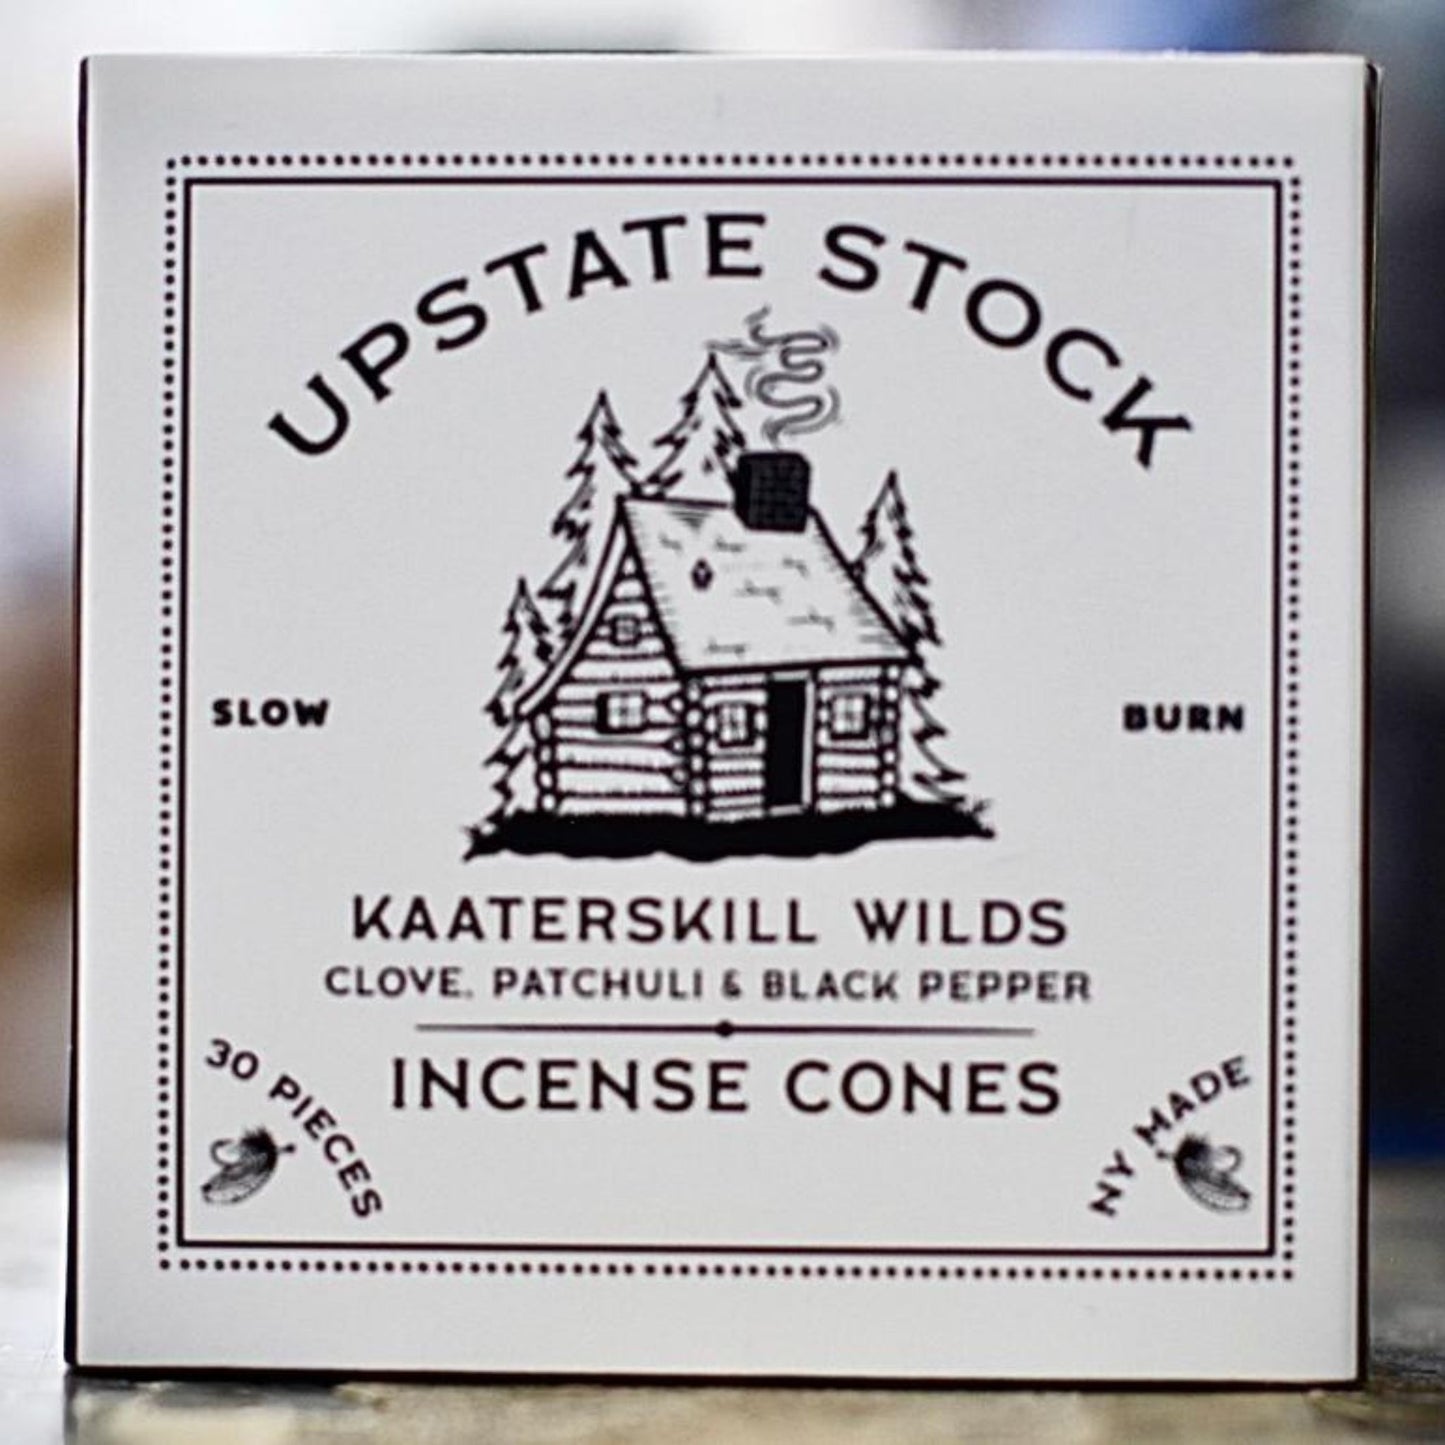 Slow Burn Upstate Stock Incense Cones